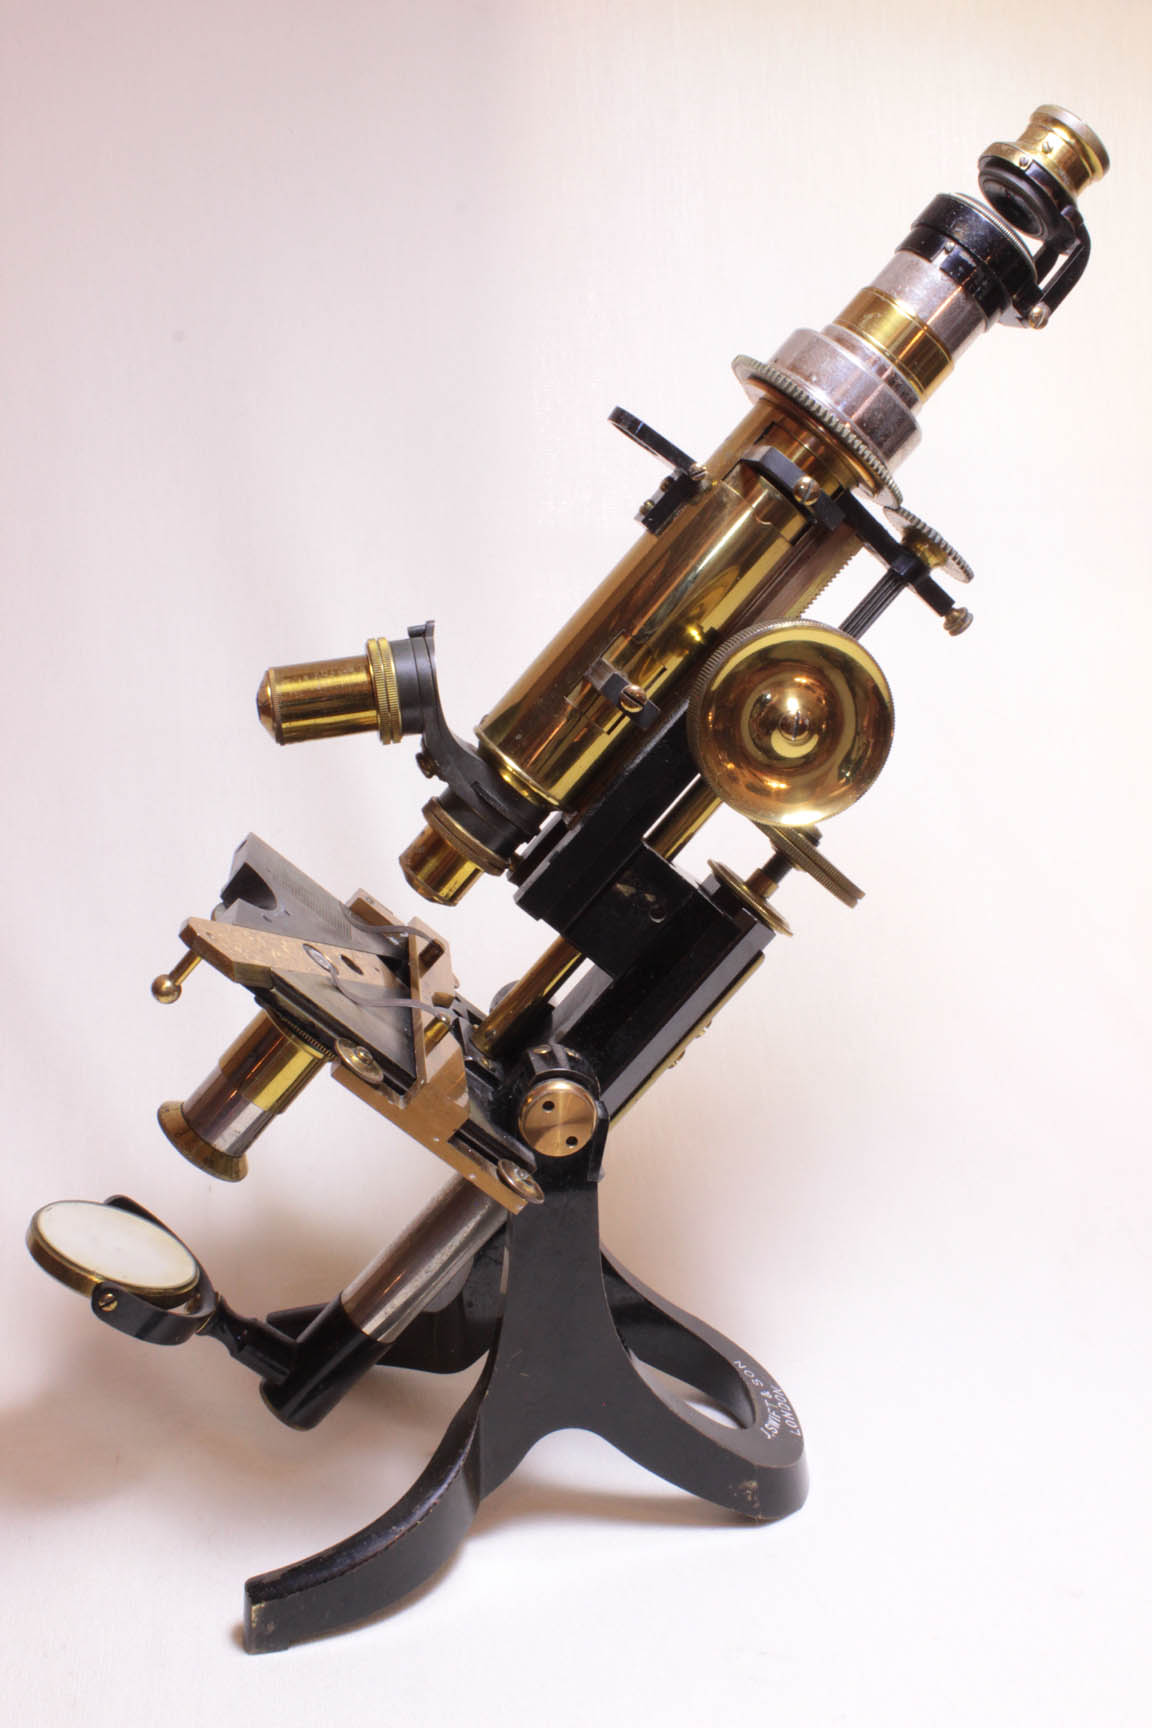 Dick microscope